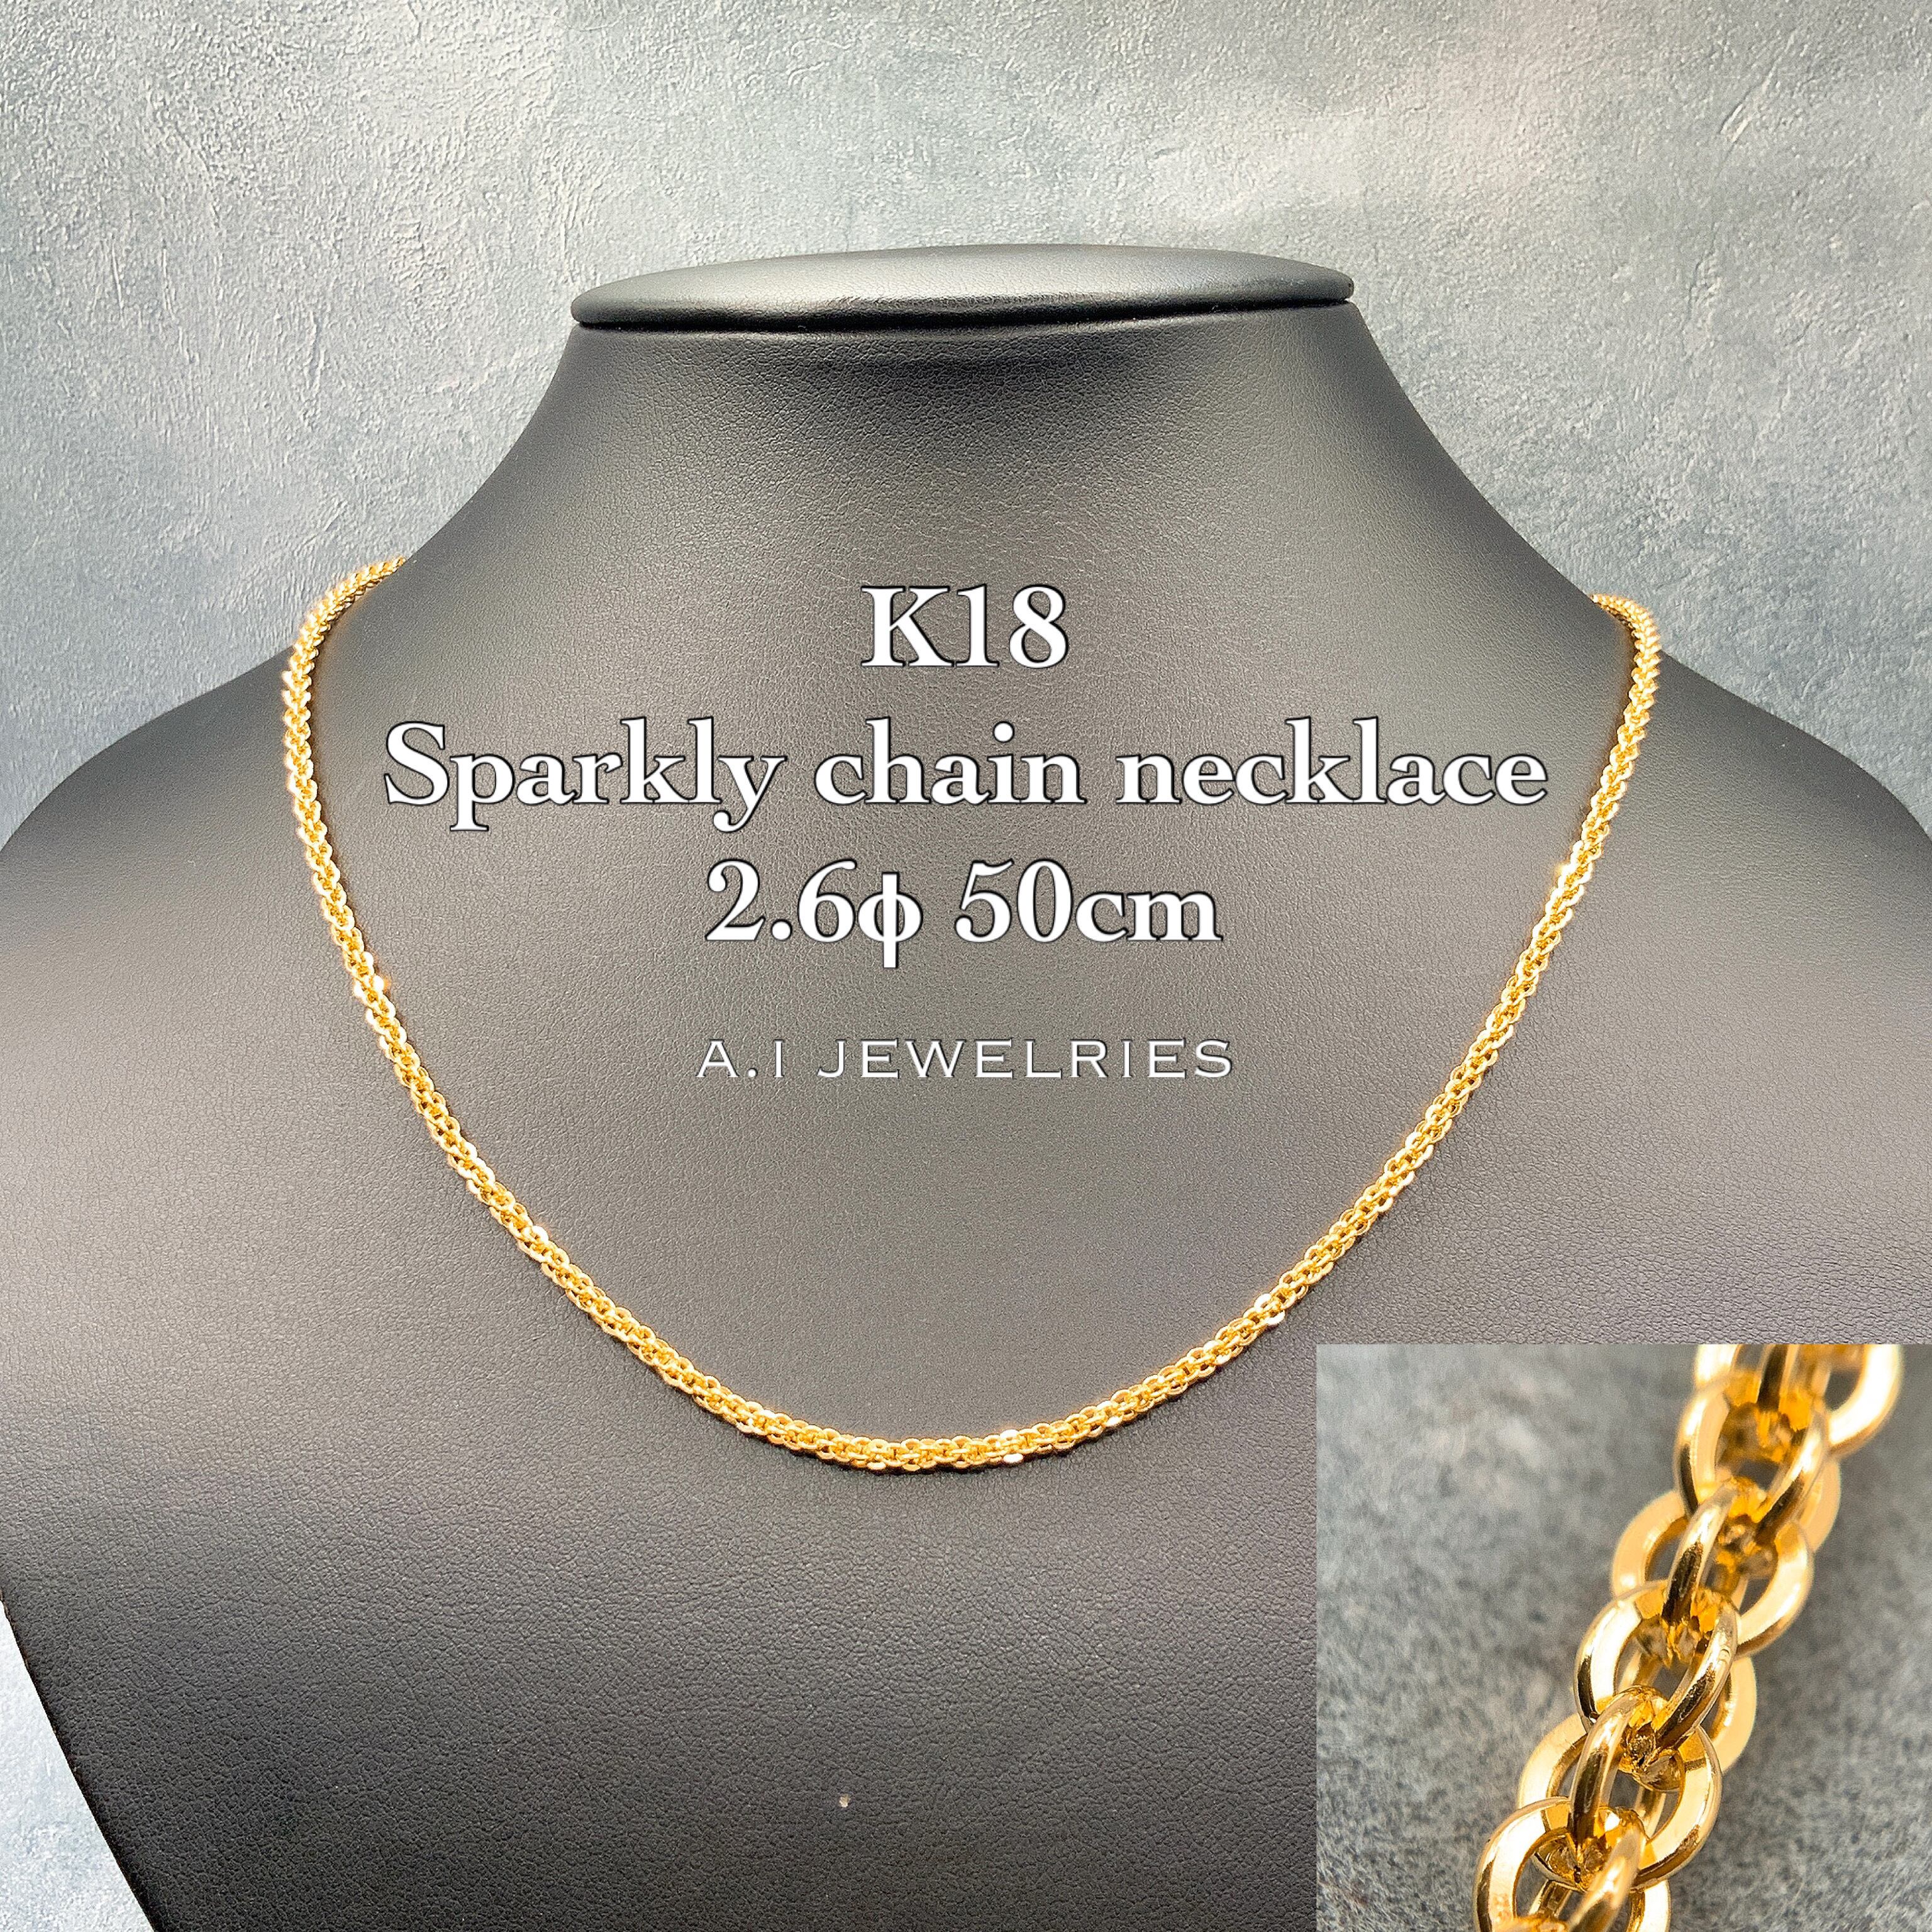 K18 スパークリー チェーン ネックレス 2.60φ 50cm 18金 18K K18 Sparkly chain necklace 2.60φ  50cm 品番ksk260-50 JEWELRIES エイアイジュエリーズ